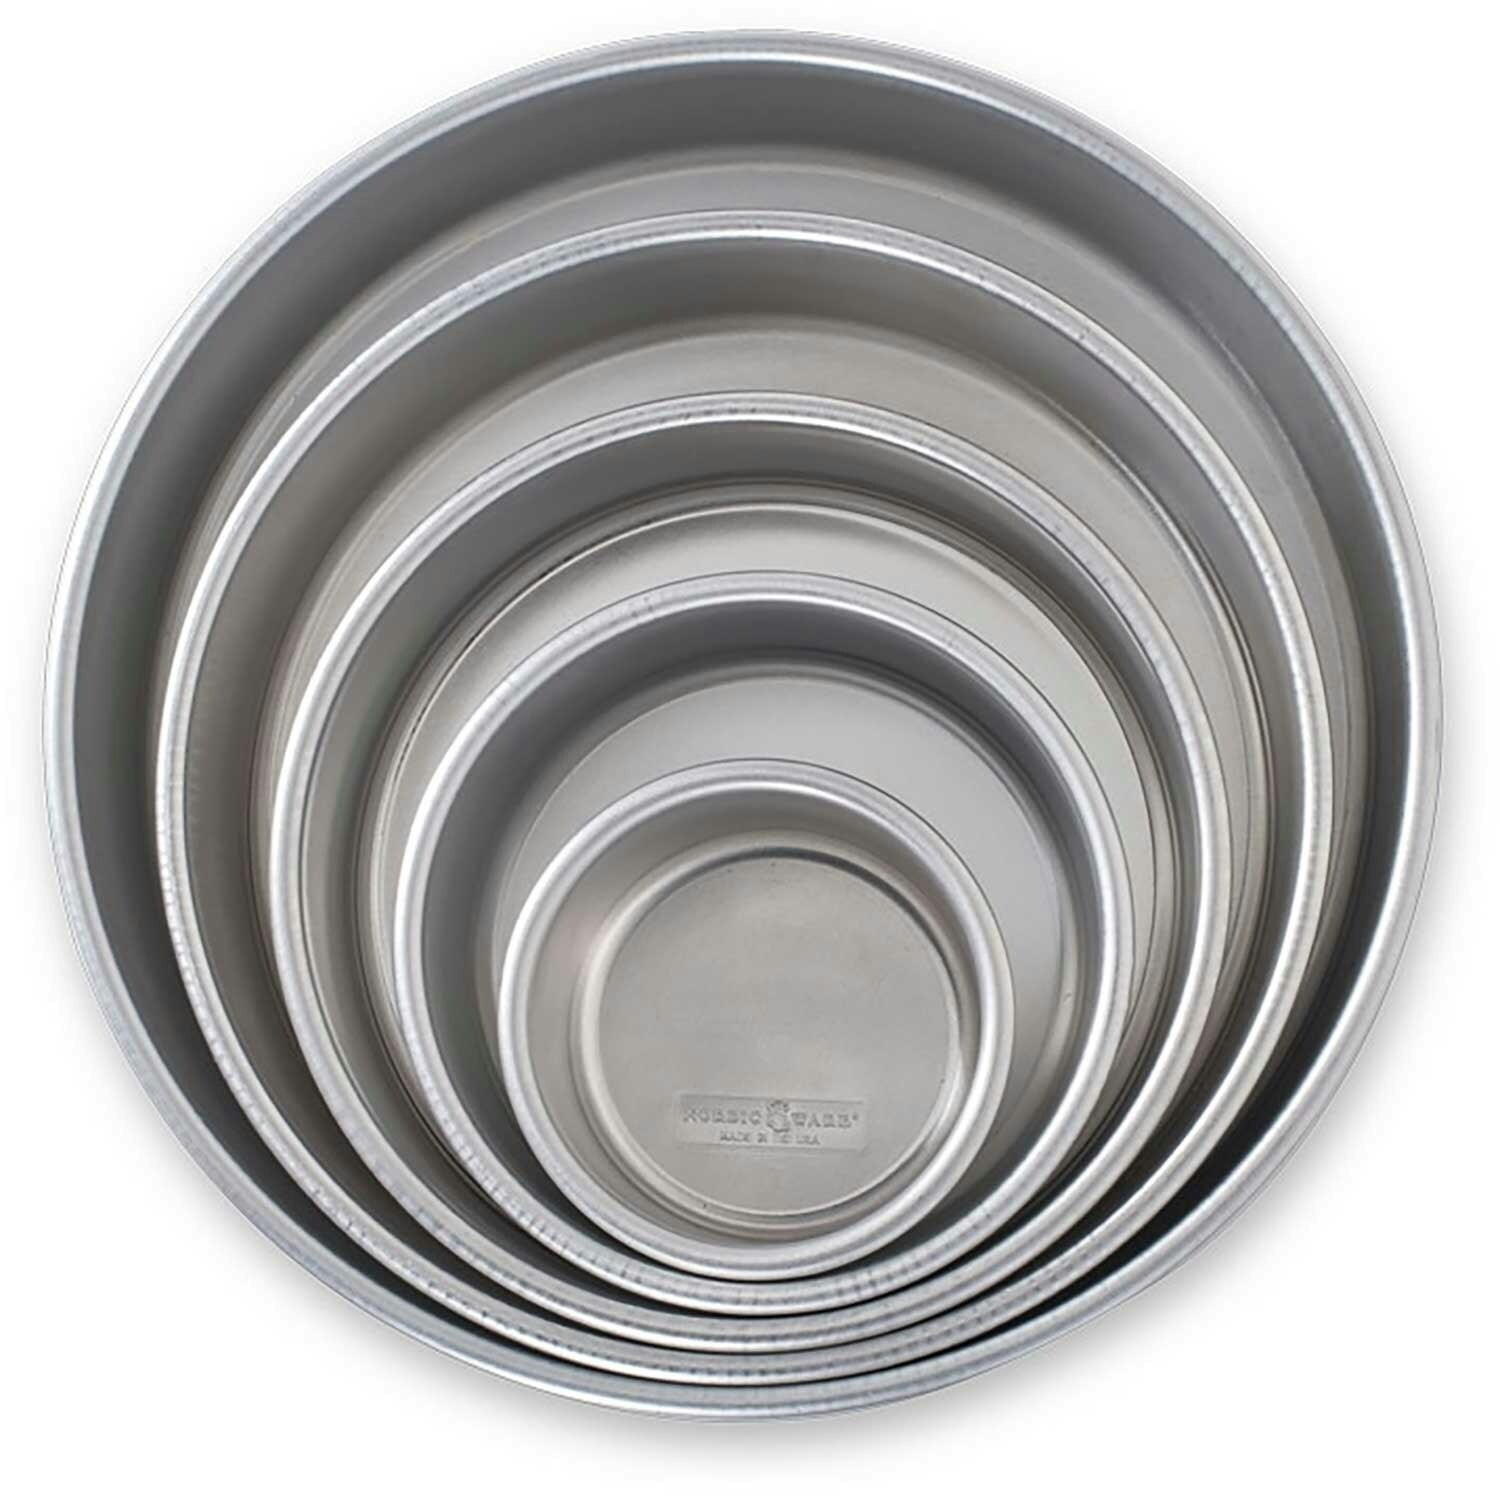 Wilton Aluminum 8-Inch Round Cake Pan Set, Multipack of 2